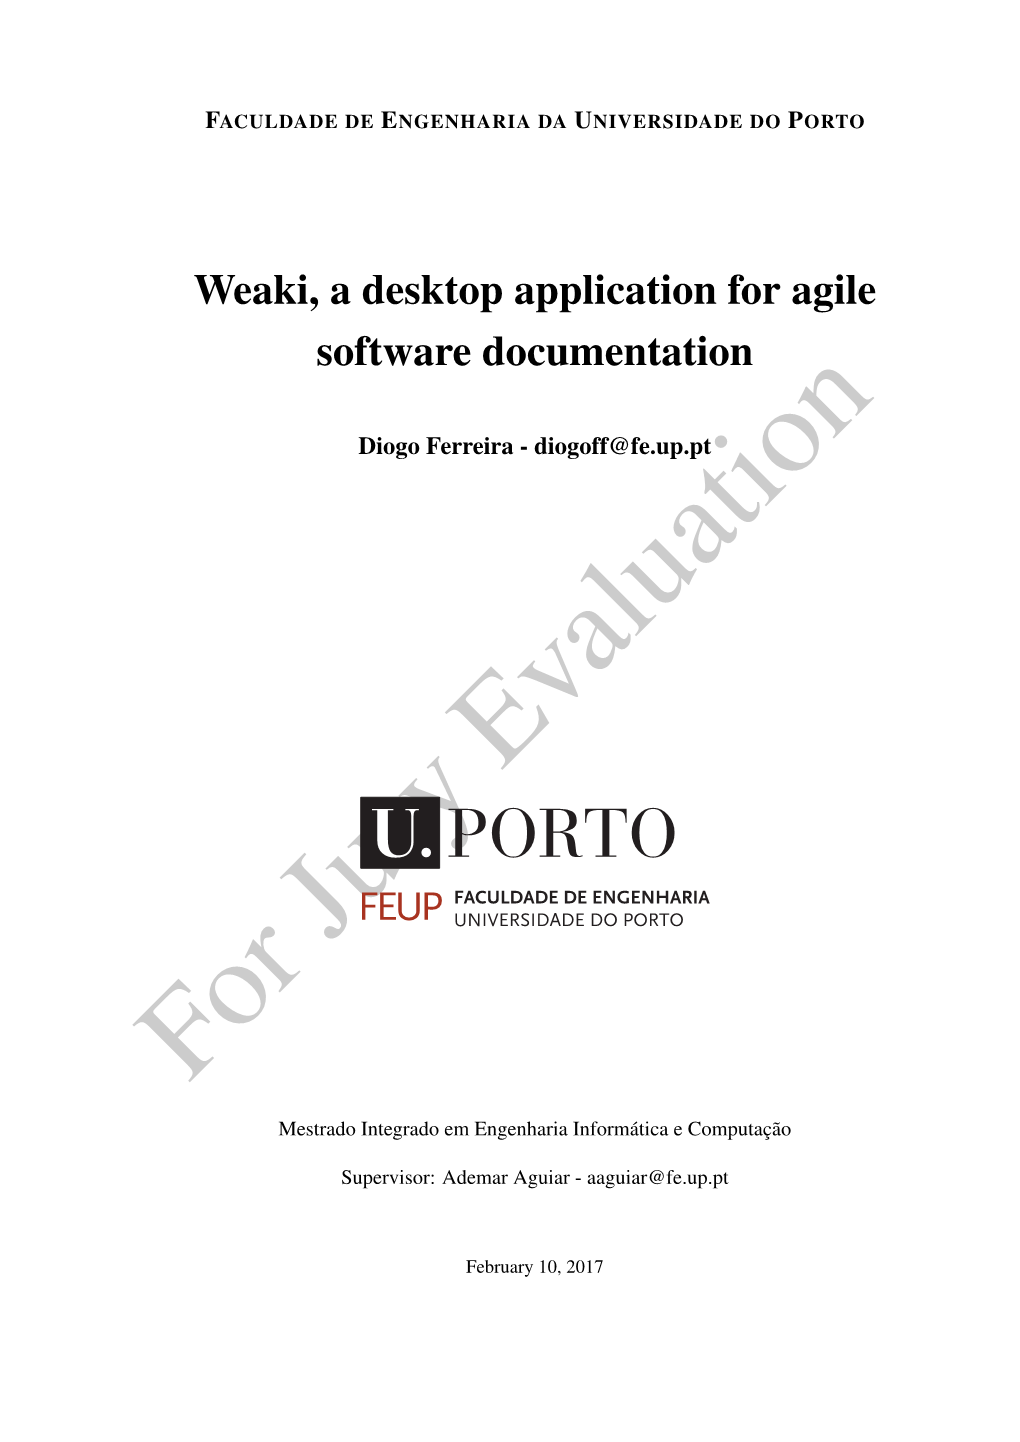 Weaki, a Desktop Application for Agile Software Documentation